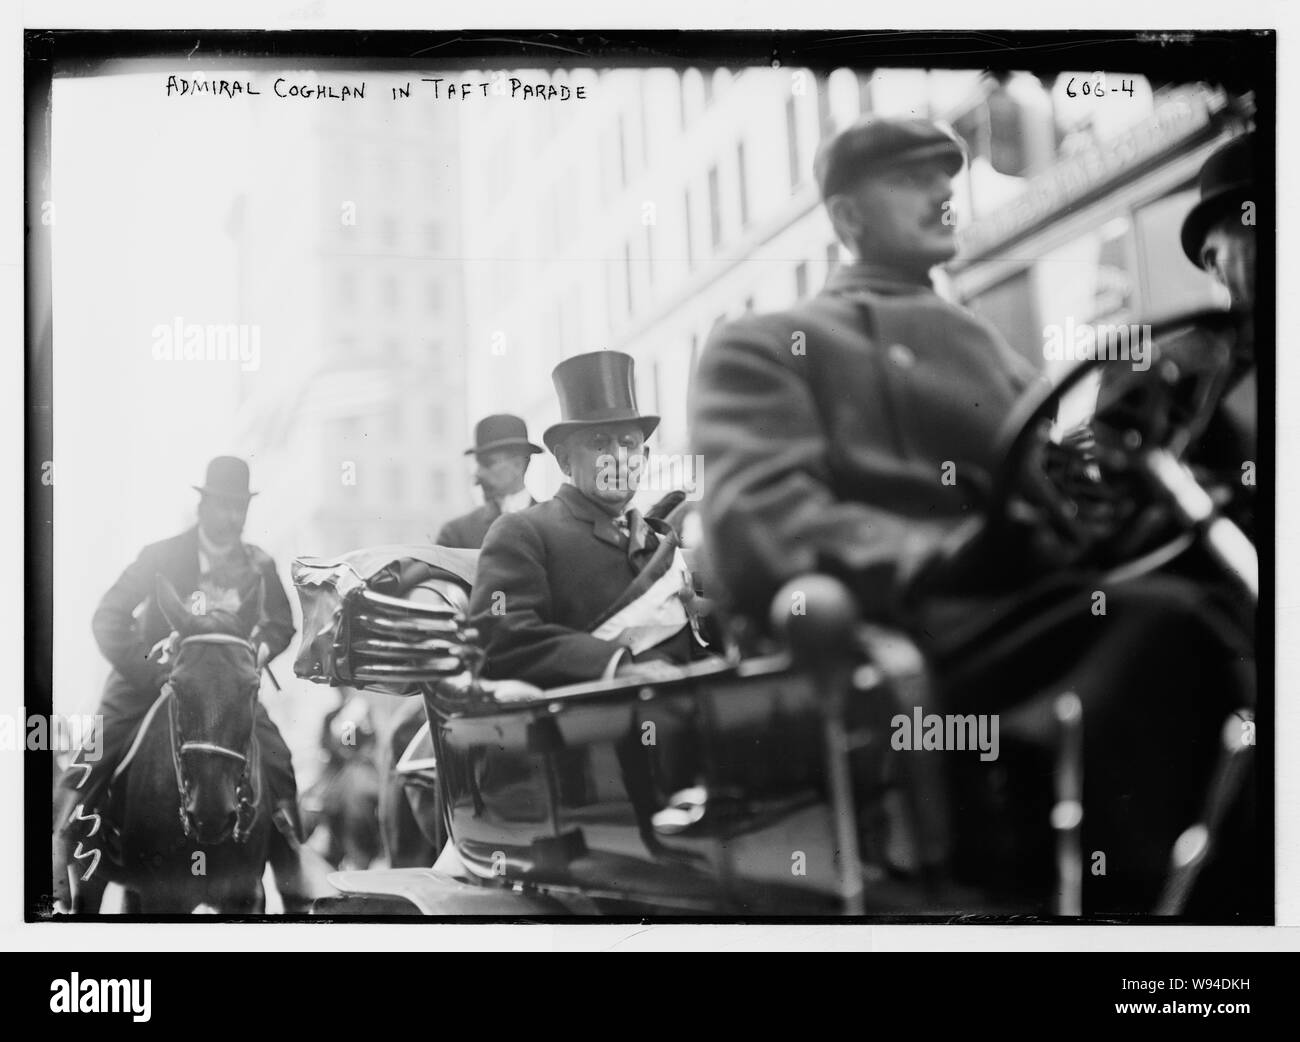 Admiral Coghlan in Taft Parade New York Stock Photo